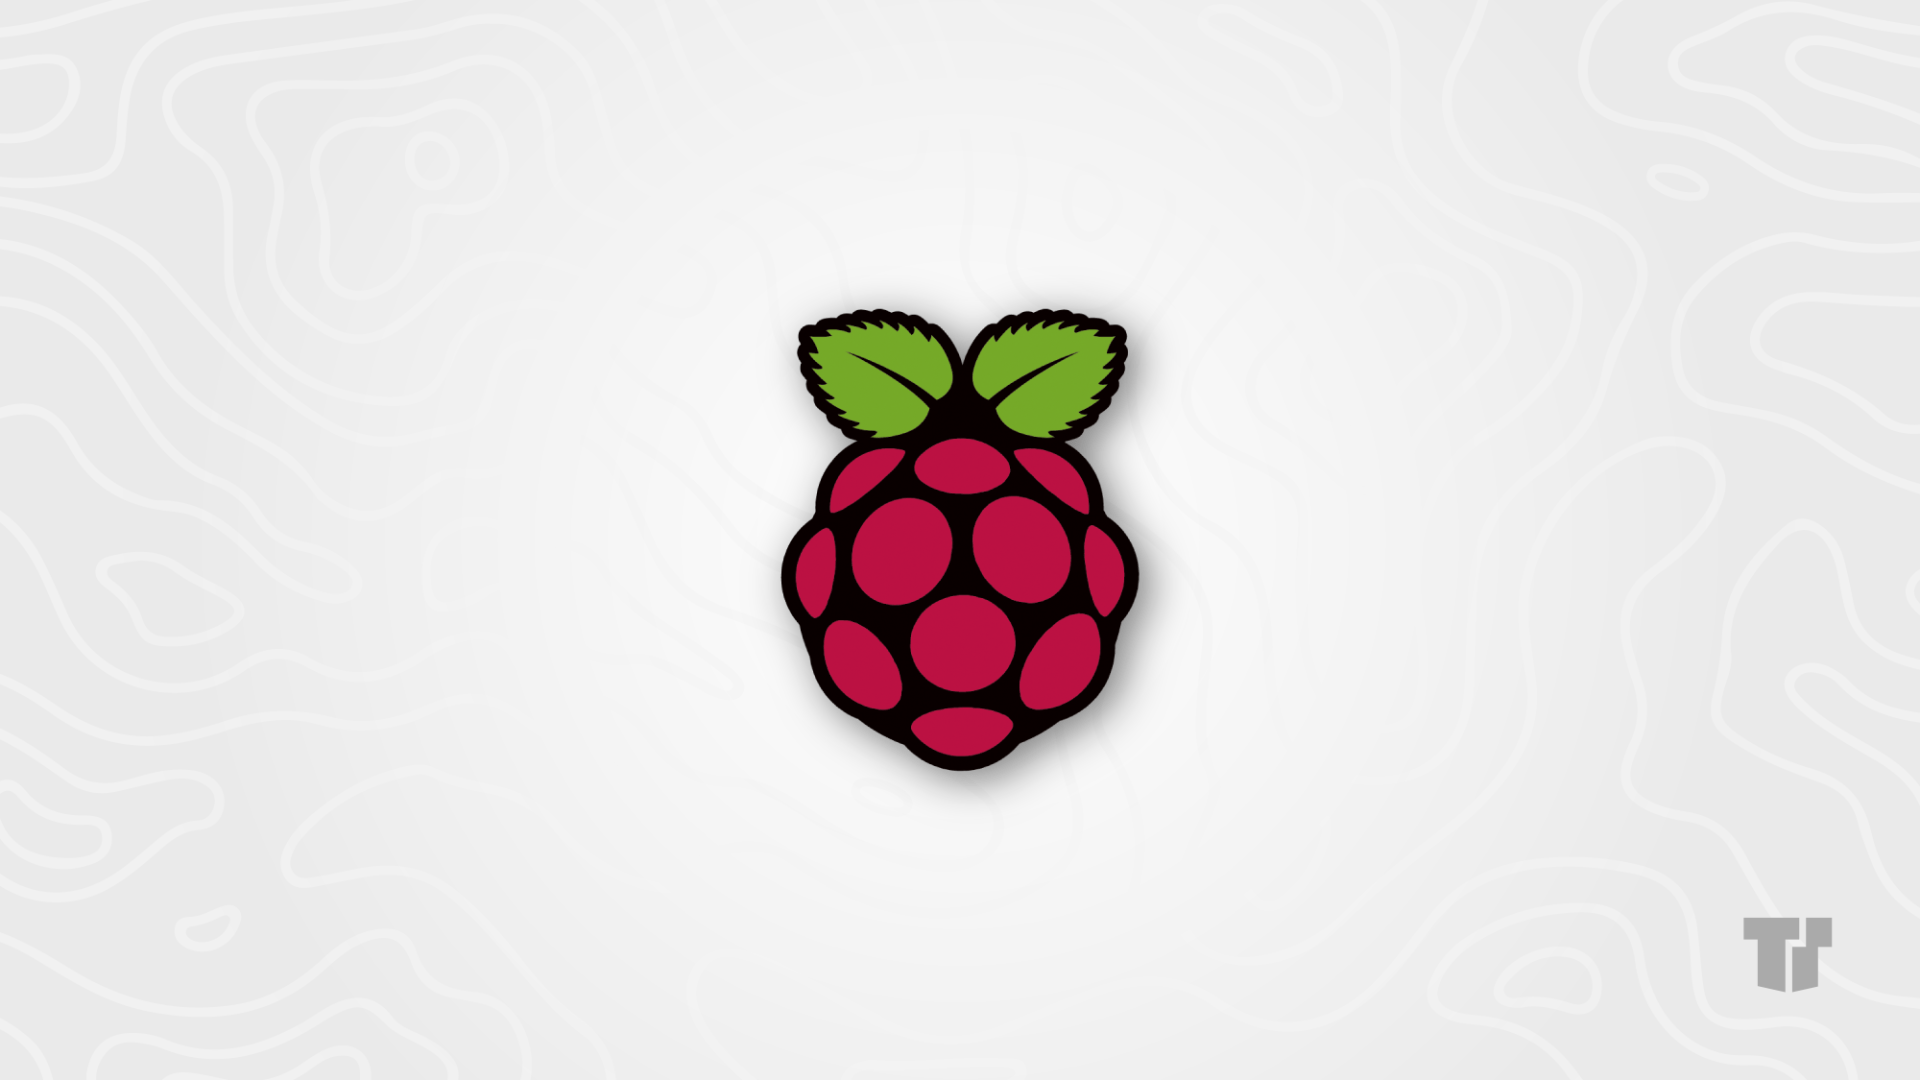 Raspberry Pi 4 cover image